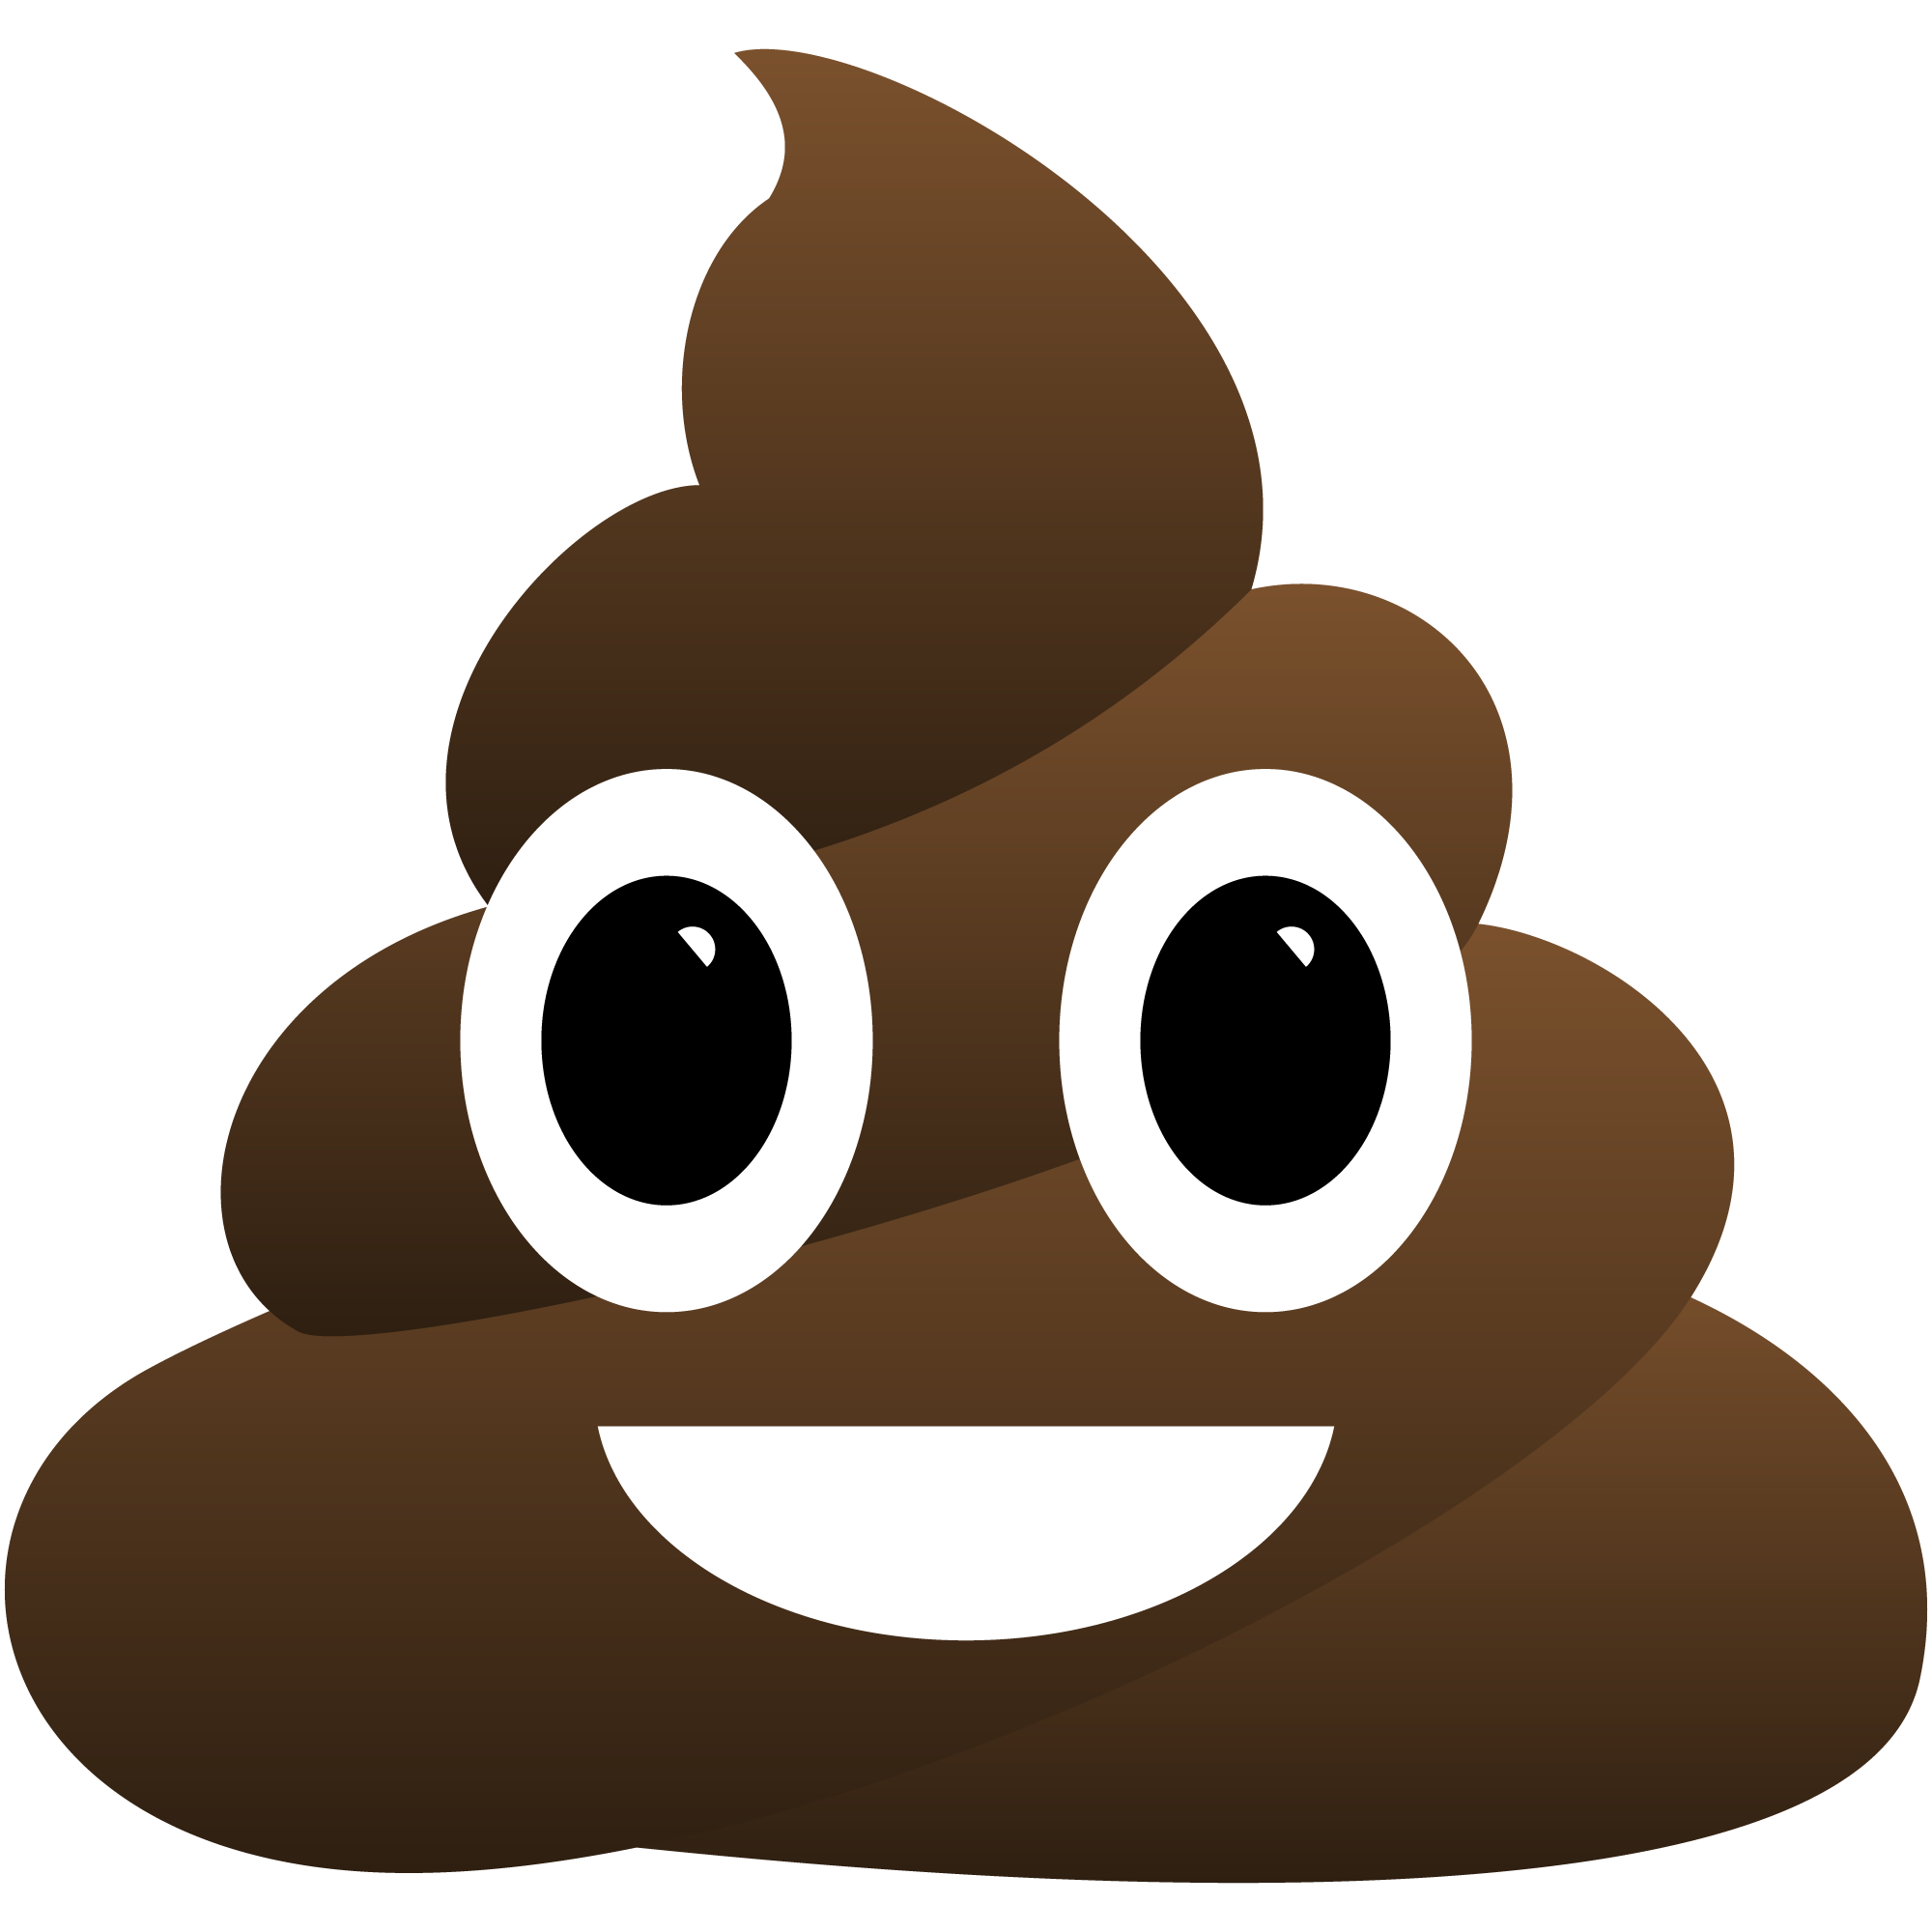 Poop Emoji PNG Clipart Background